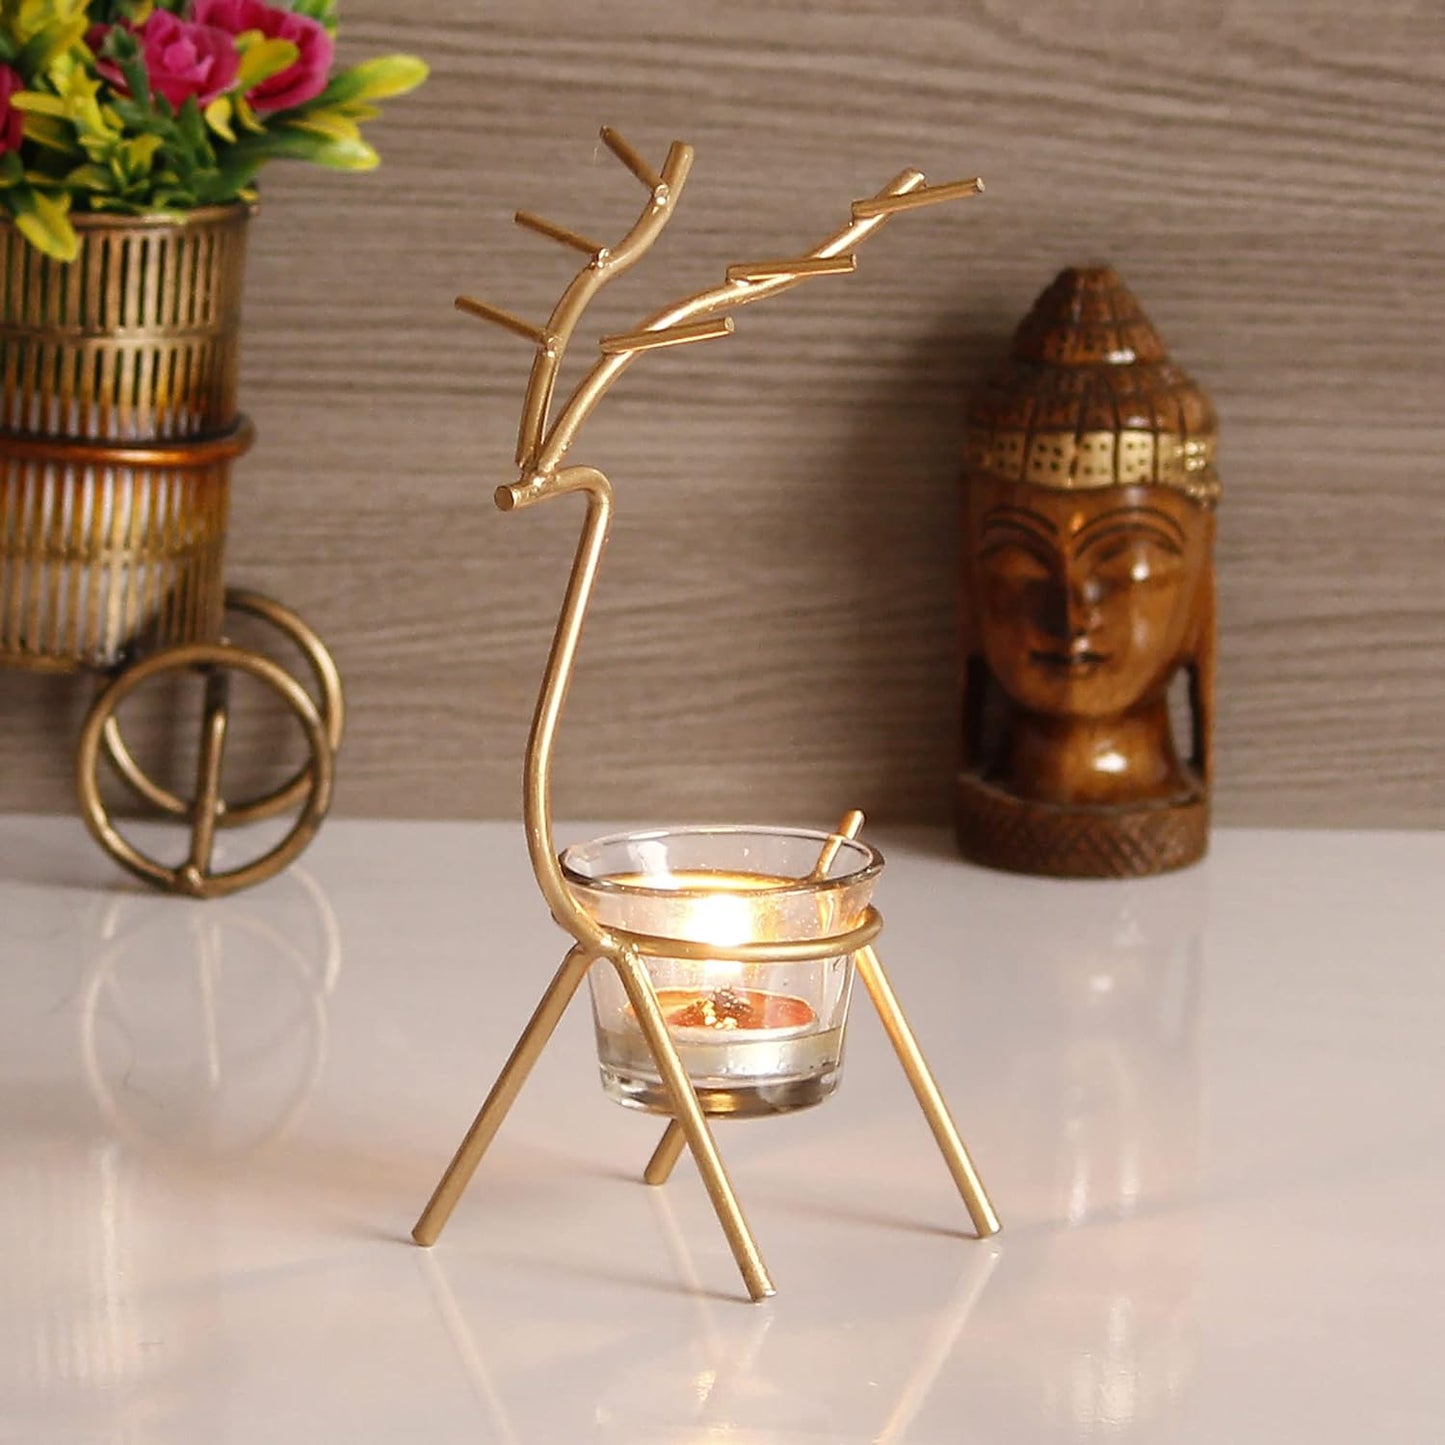 eCraftIndia Set of 2 Deer Shape Decorative Handcrafted Metal Tea Light Holder